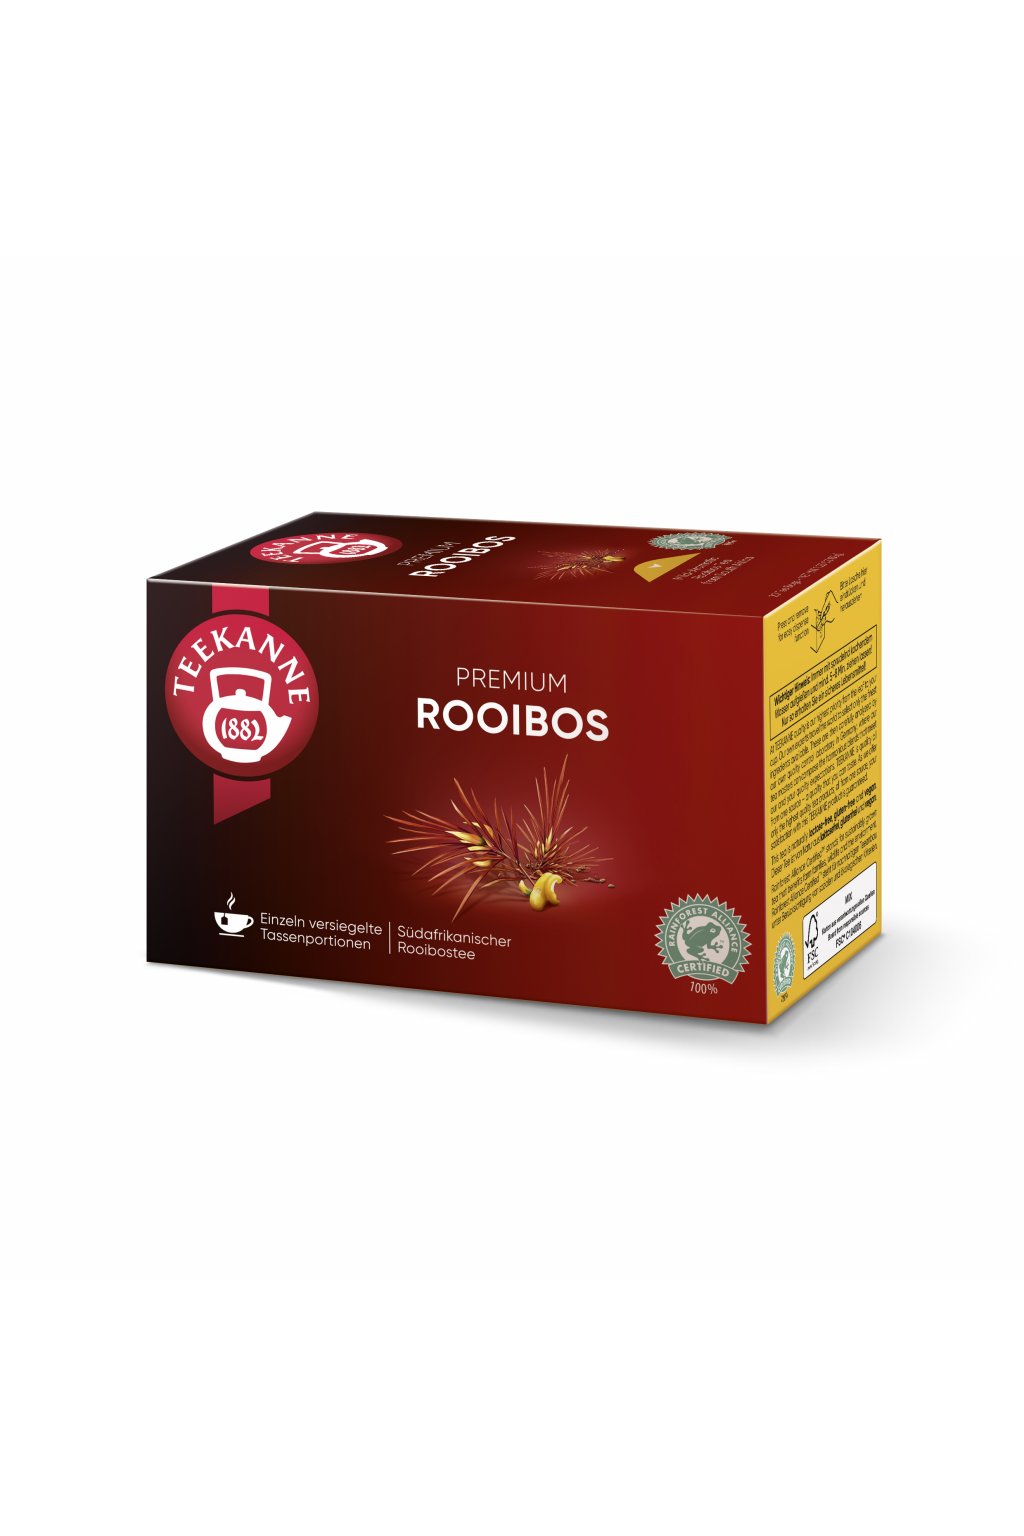 TK Gastro Premium Rooibos Packshot RGB